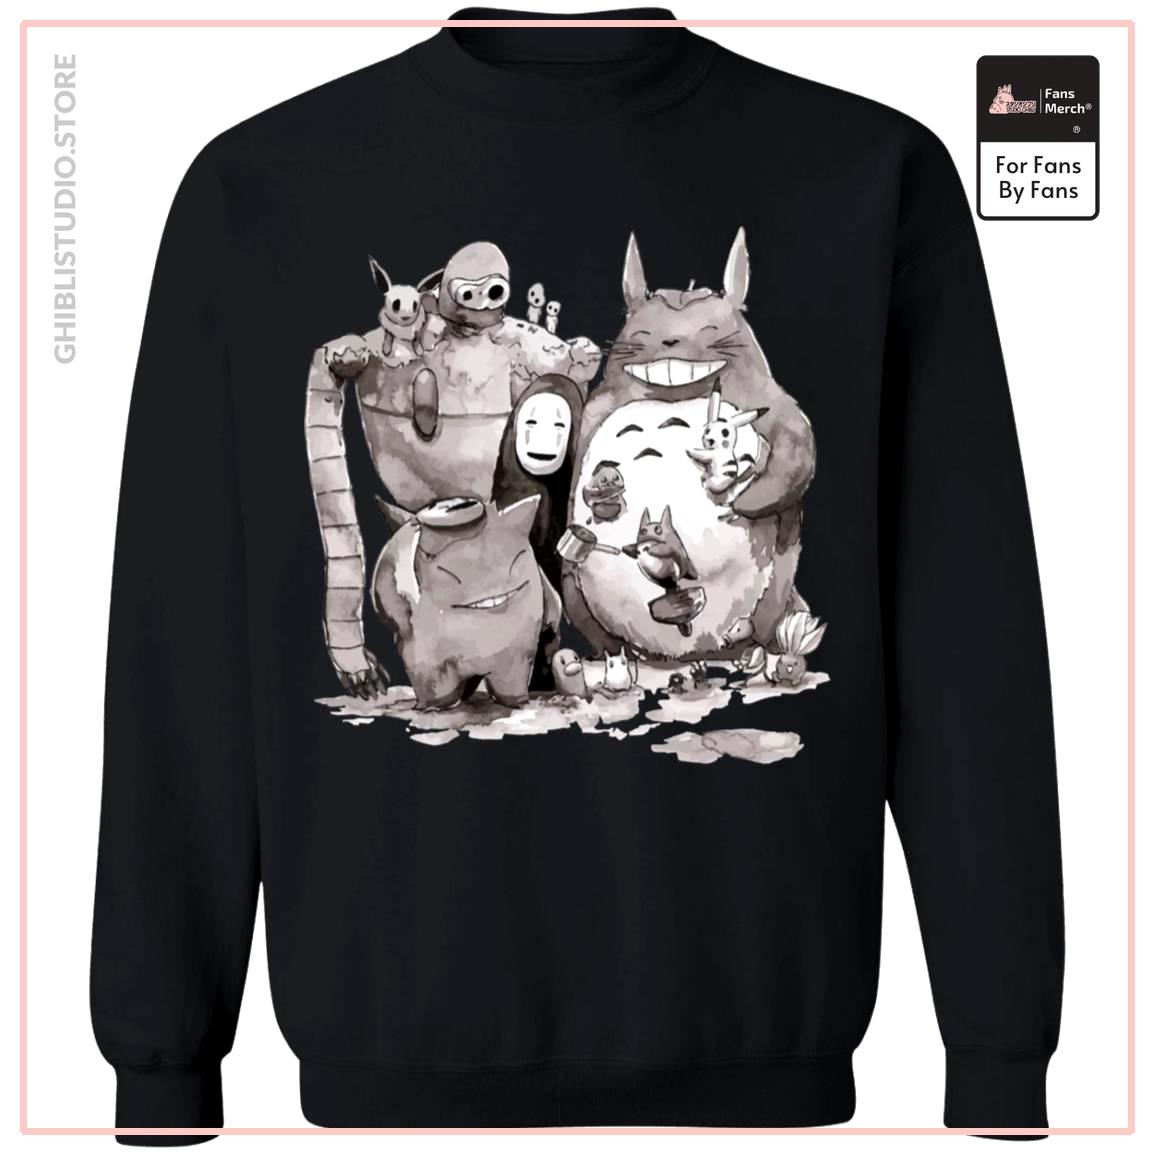 Studio Ghibli Elemental Short-Sleeve Unisex T-Shirt - Ghibli Merch Store -  Official Studio Ghibli Merchandise